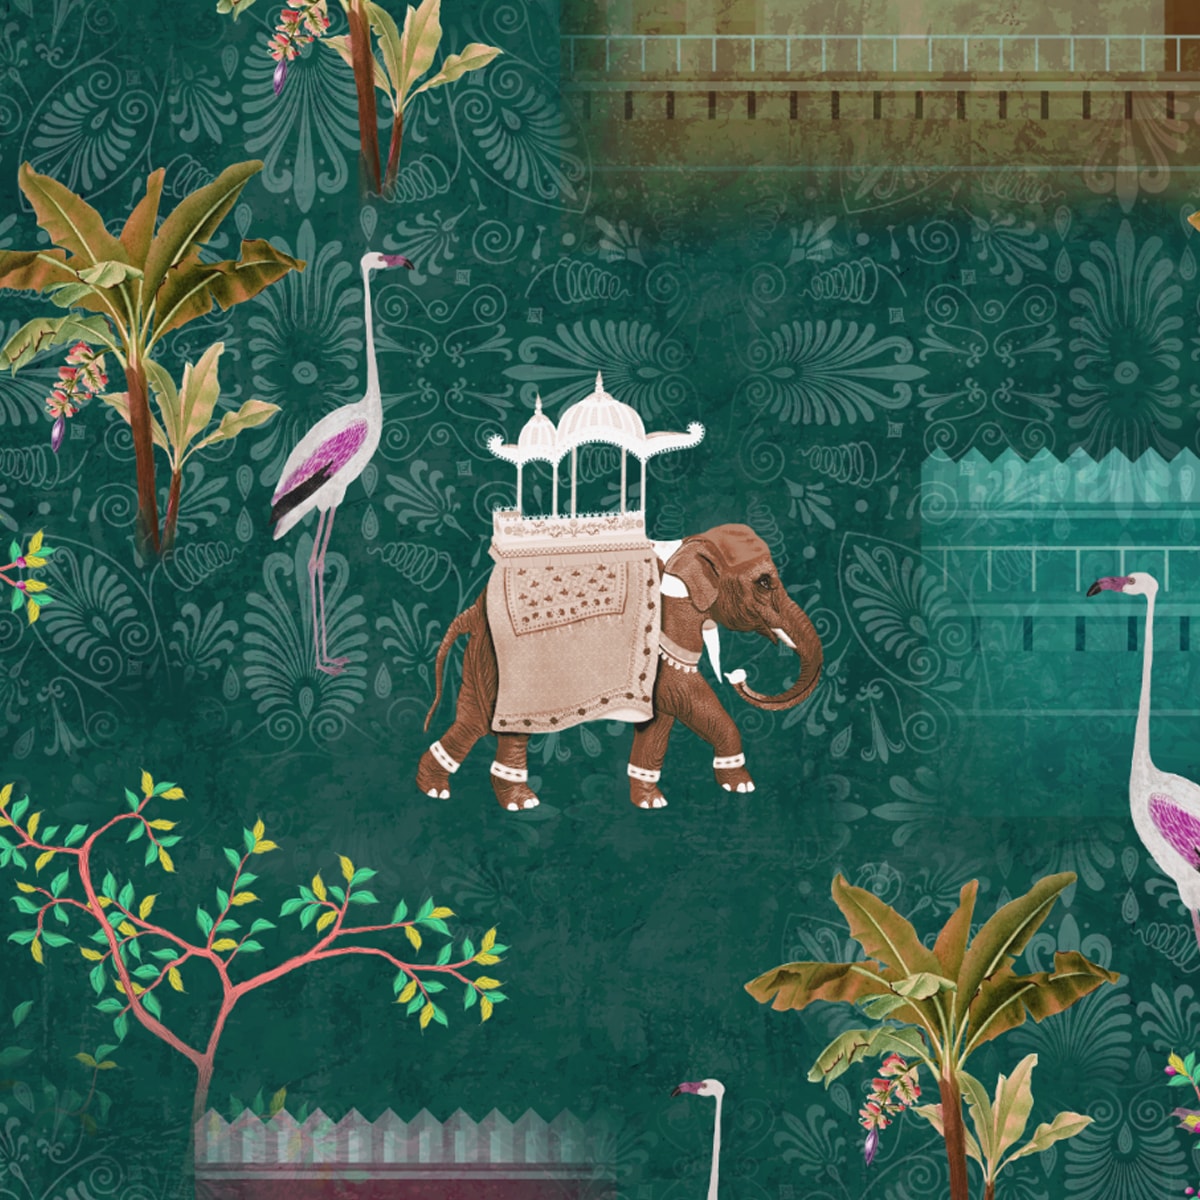 Royal Garden, an Indian Scenic Wallpaper